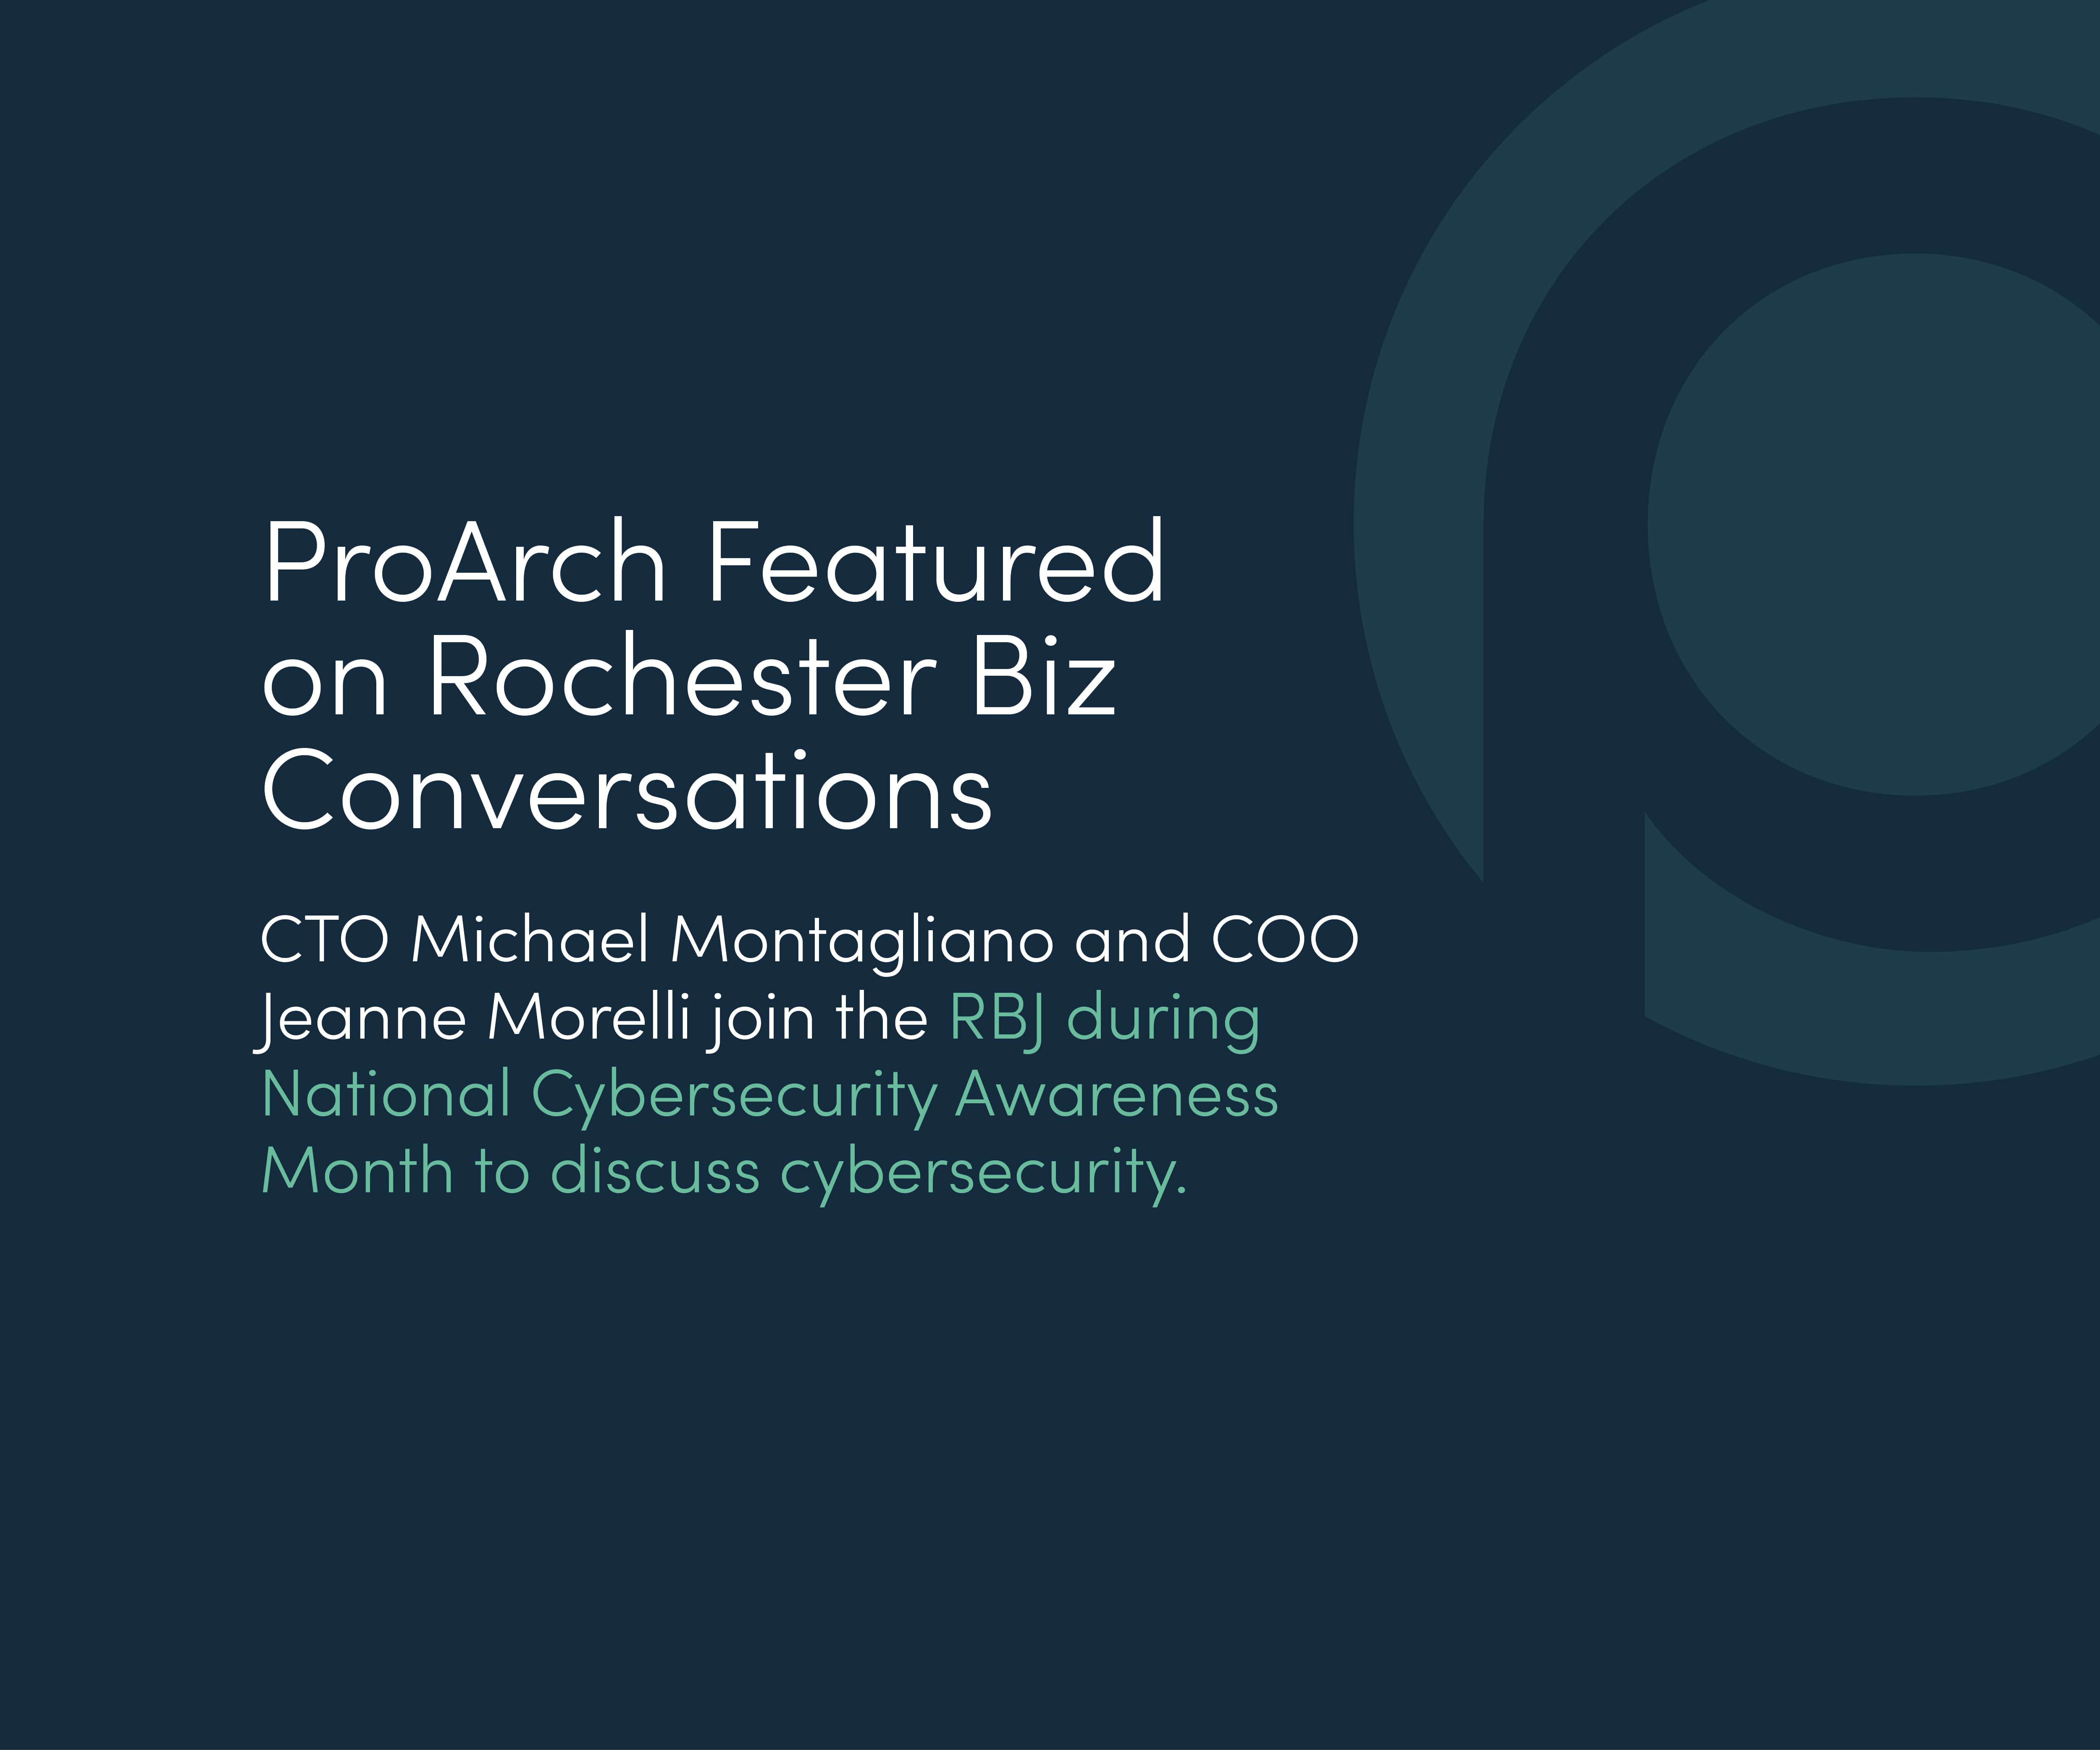 ProArch featured on Rochester Biz Conversations Video Series